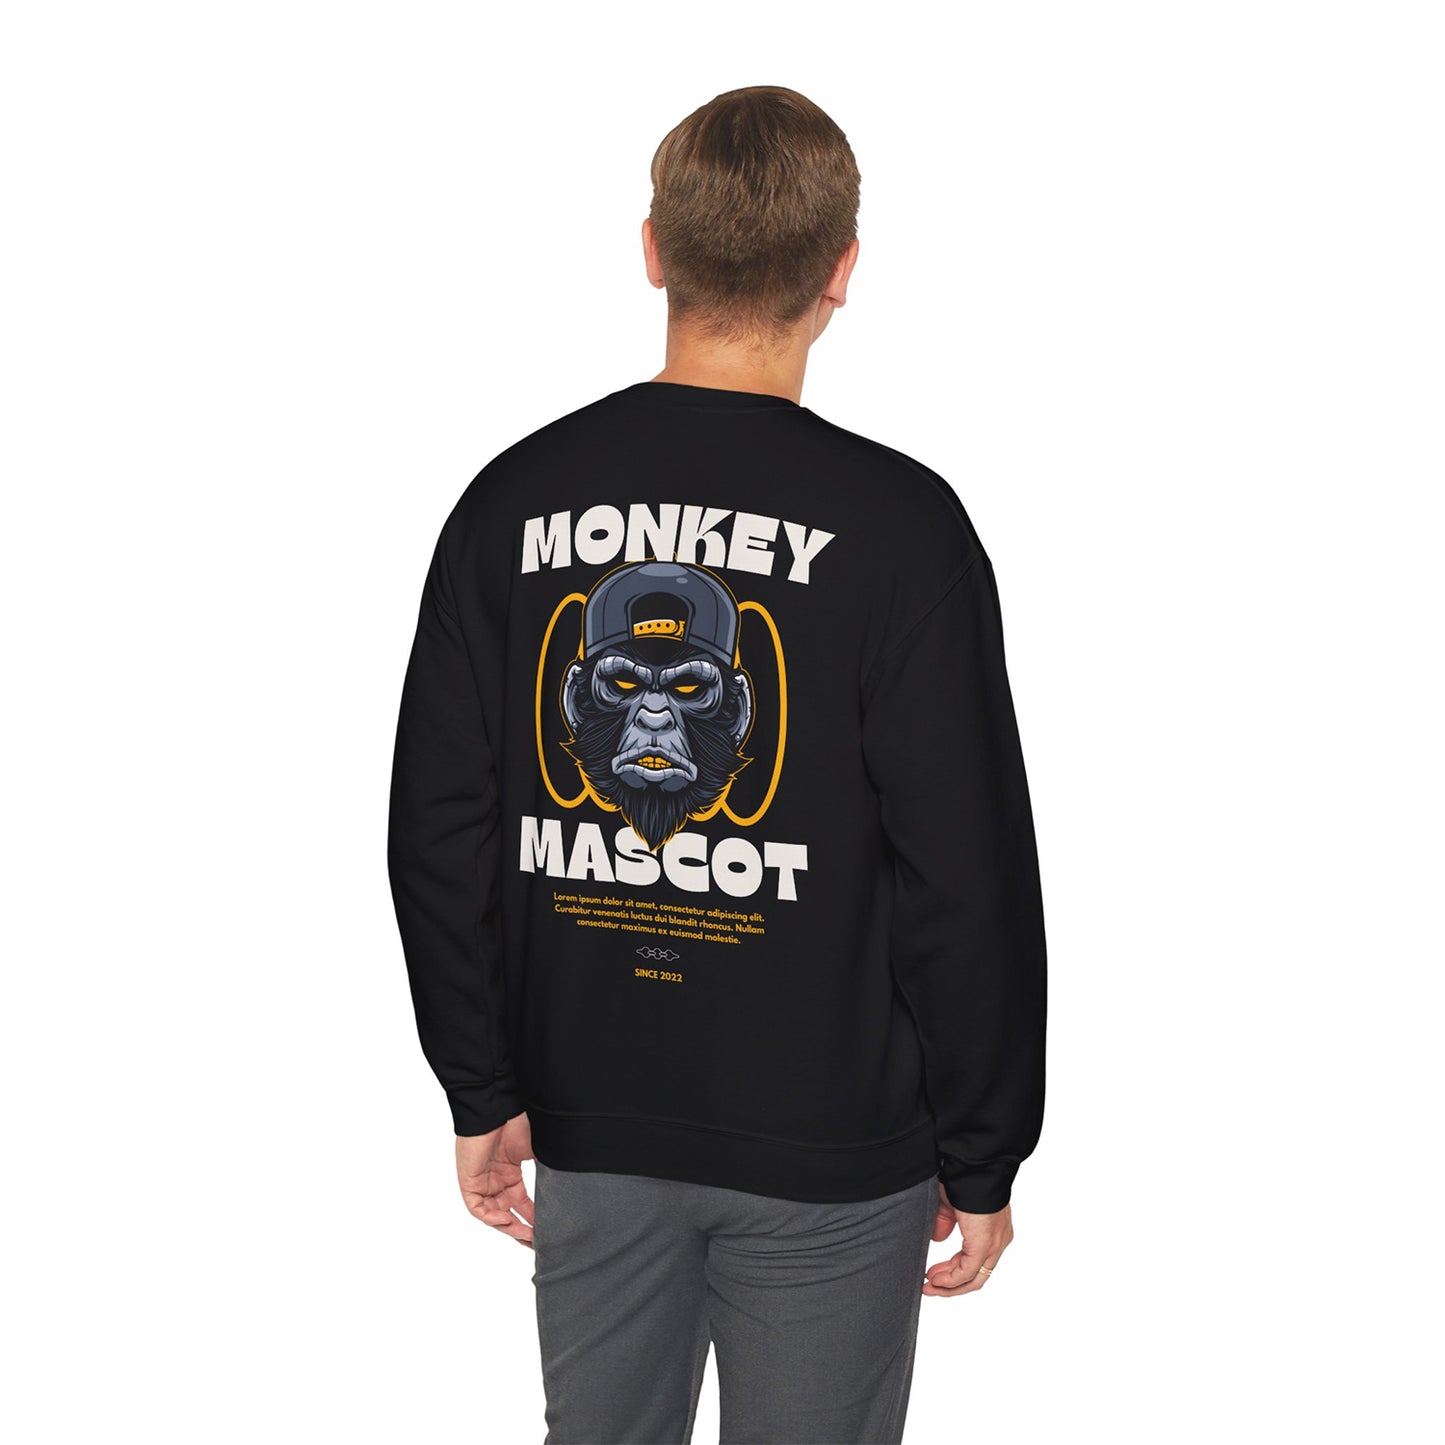 Monkey Mascot Sweatshirt for Men